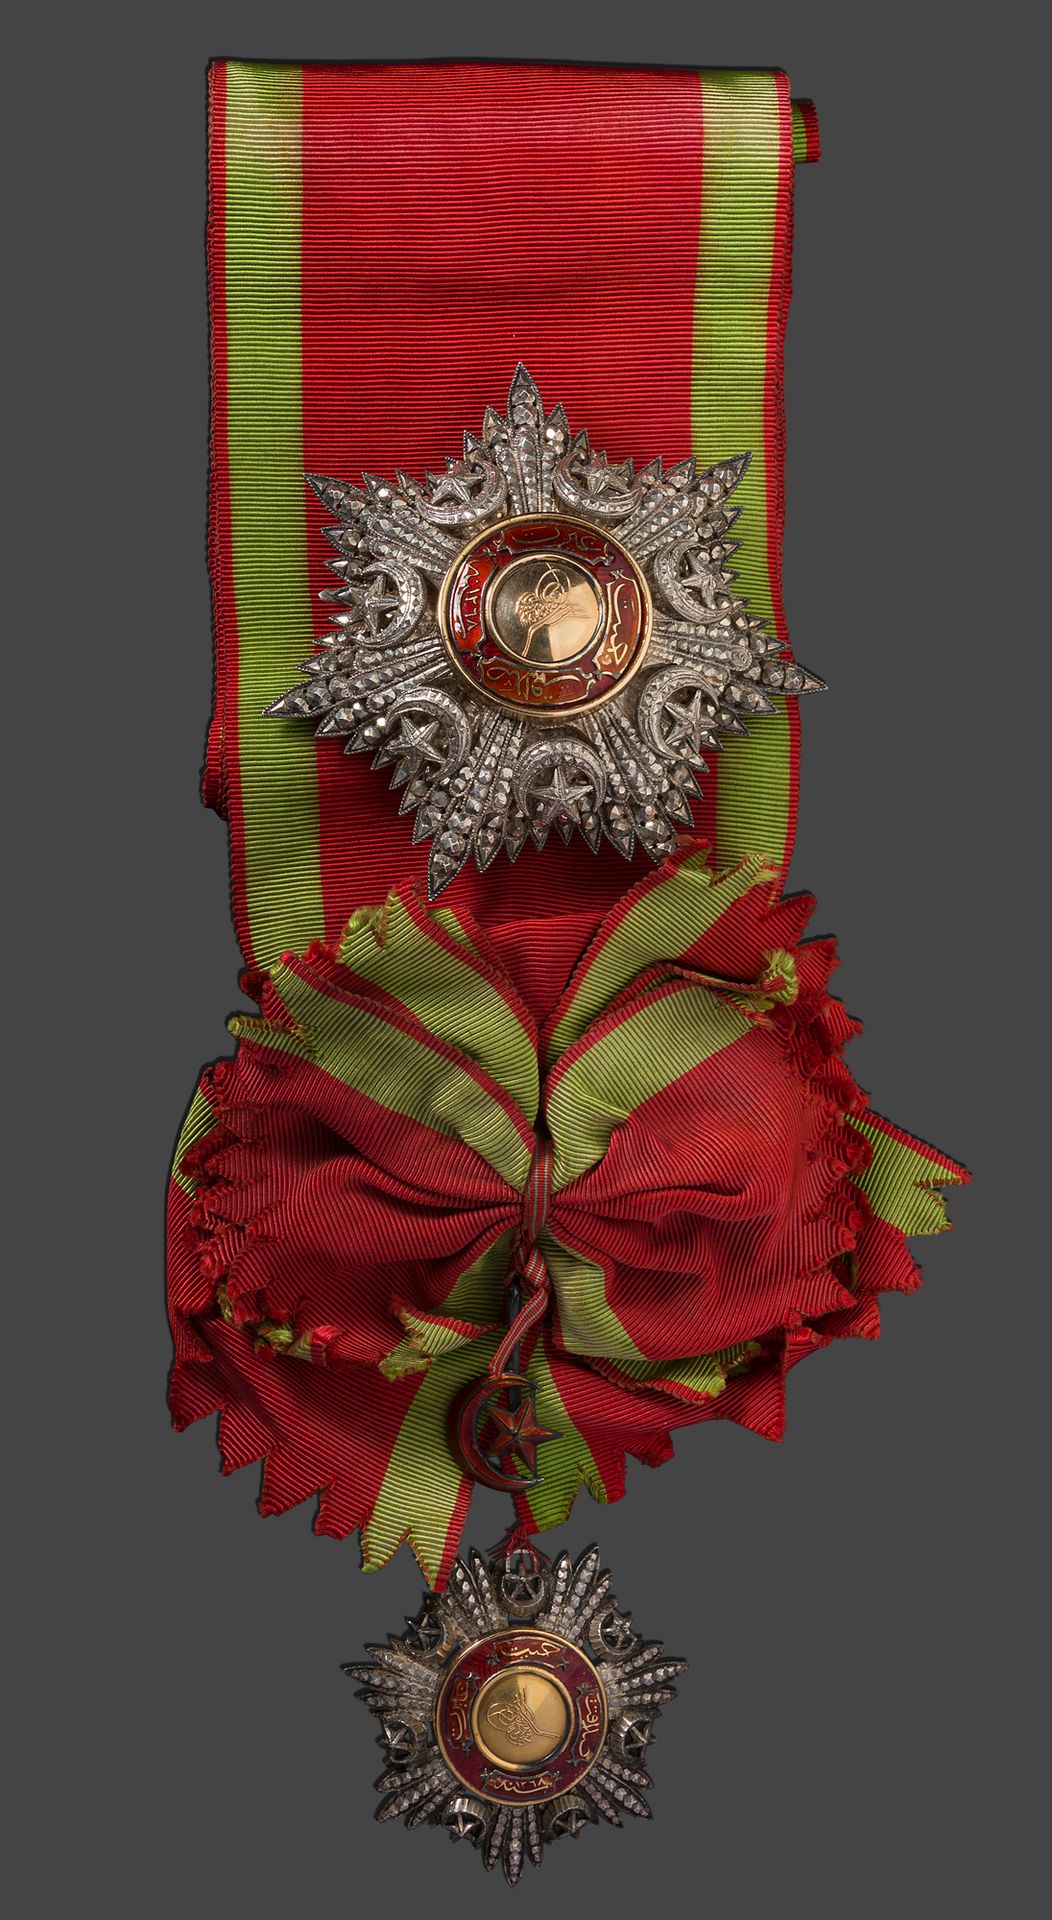 Null OTTOMAN帝国--1885年创建的MEDJIDE骑士团。

大官员的牌子及其奖章。该奖章由银质钻石点制成，穿有红色珐琅的黄金或vermeil中心。&hellip;